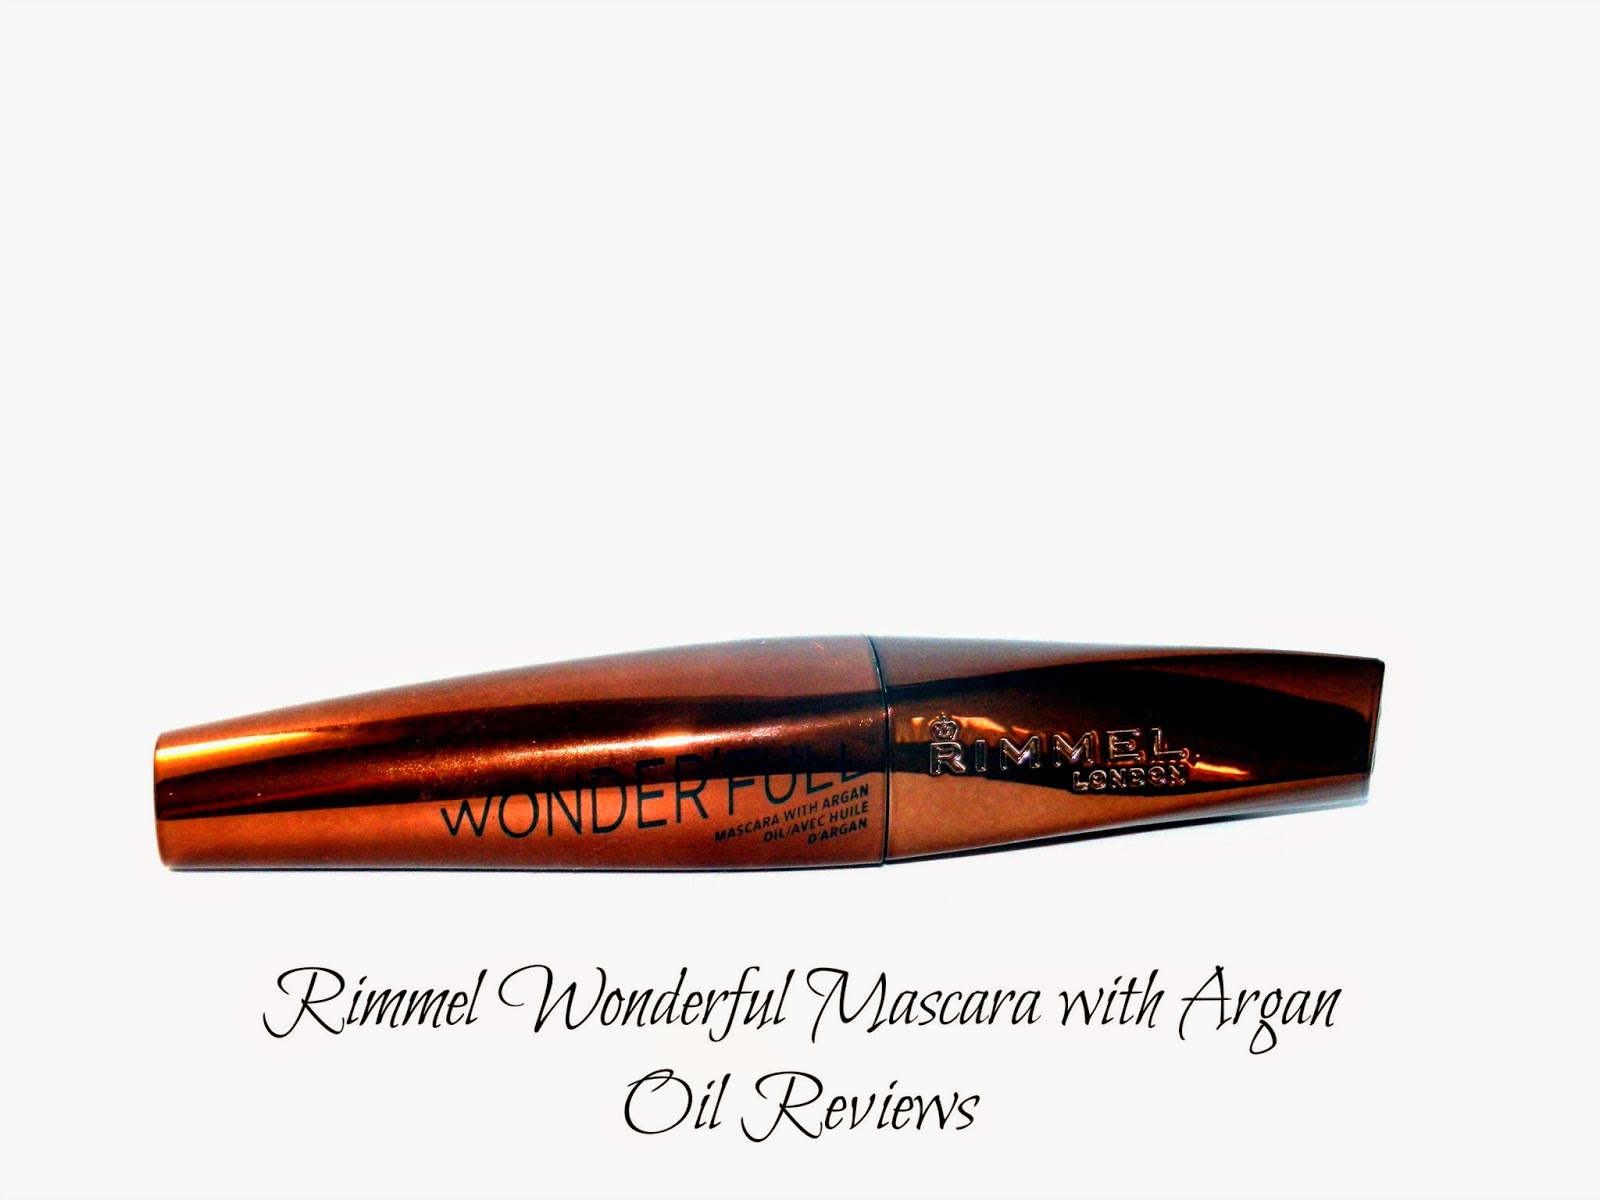 Rimmel Wonderful Mascara with Argan Oil Reviews